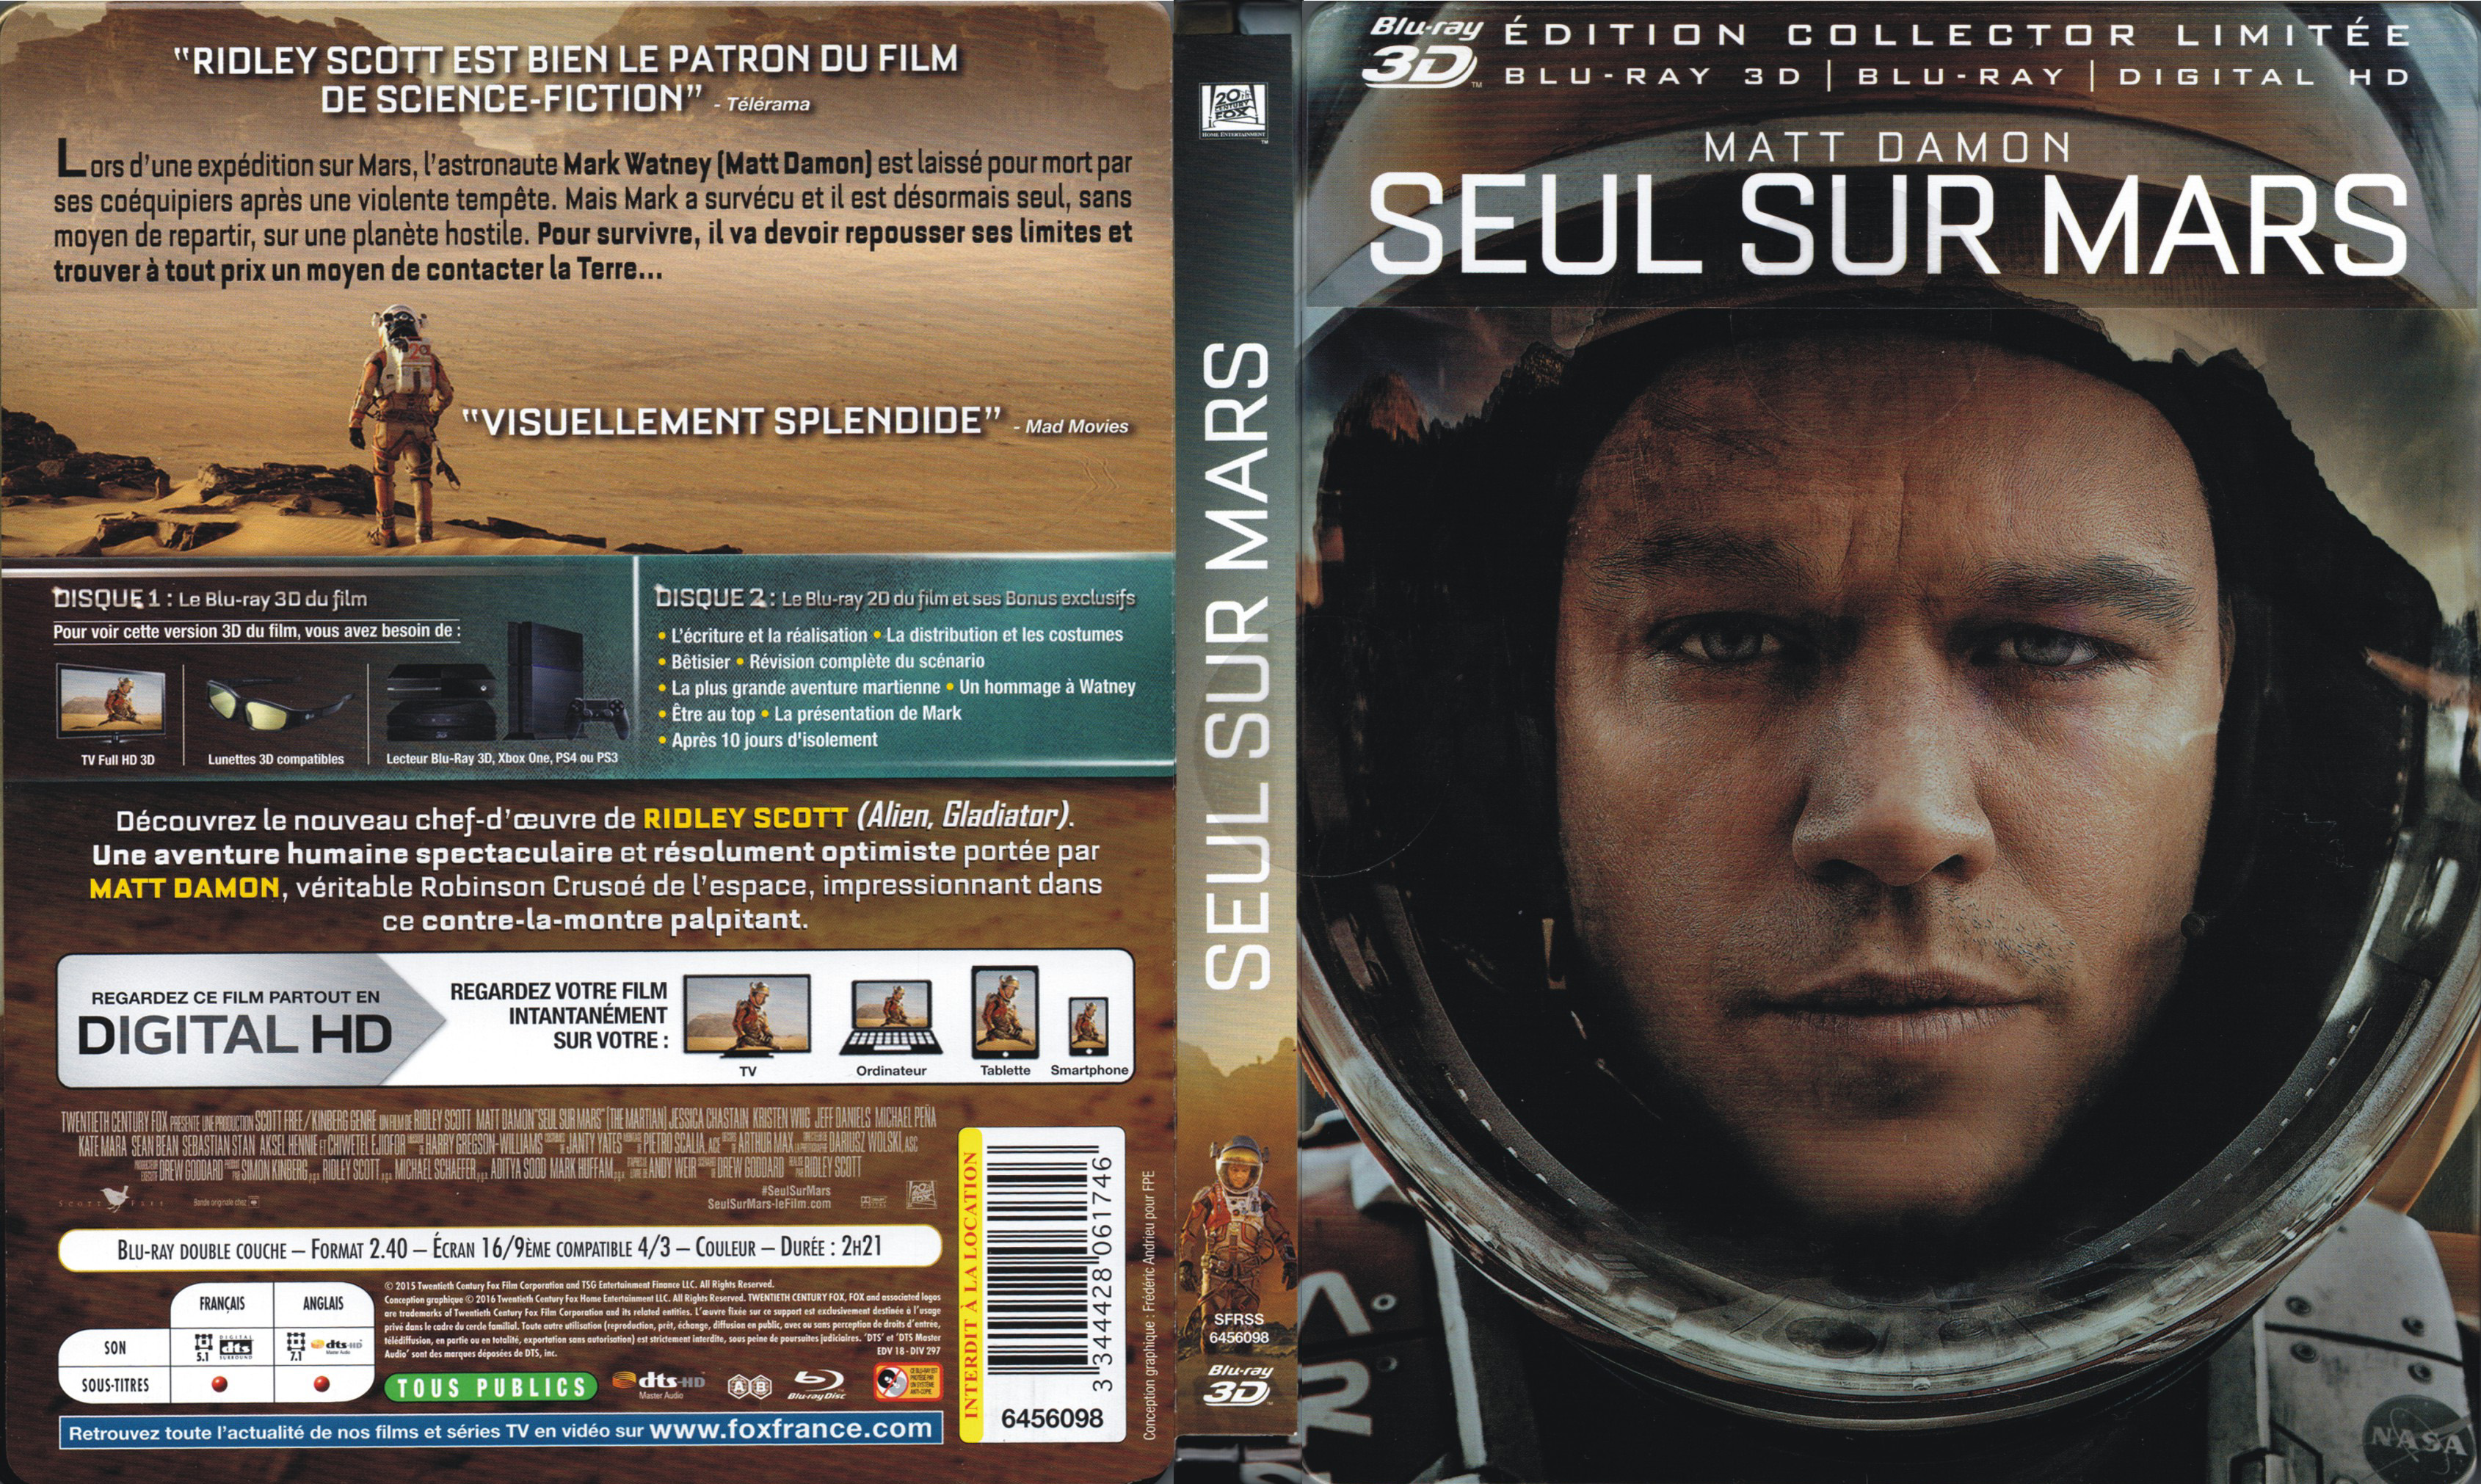 Jaquette DVD Seul sur Mars 3D (BLU-RAY) v2